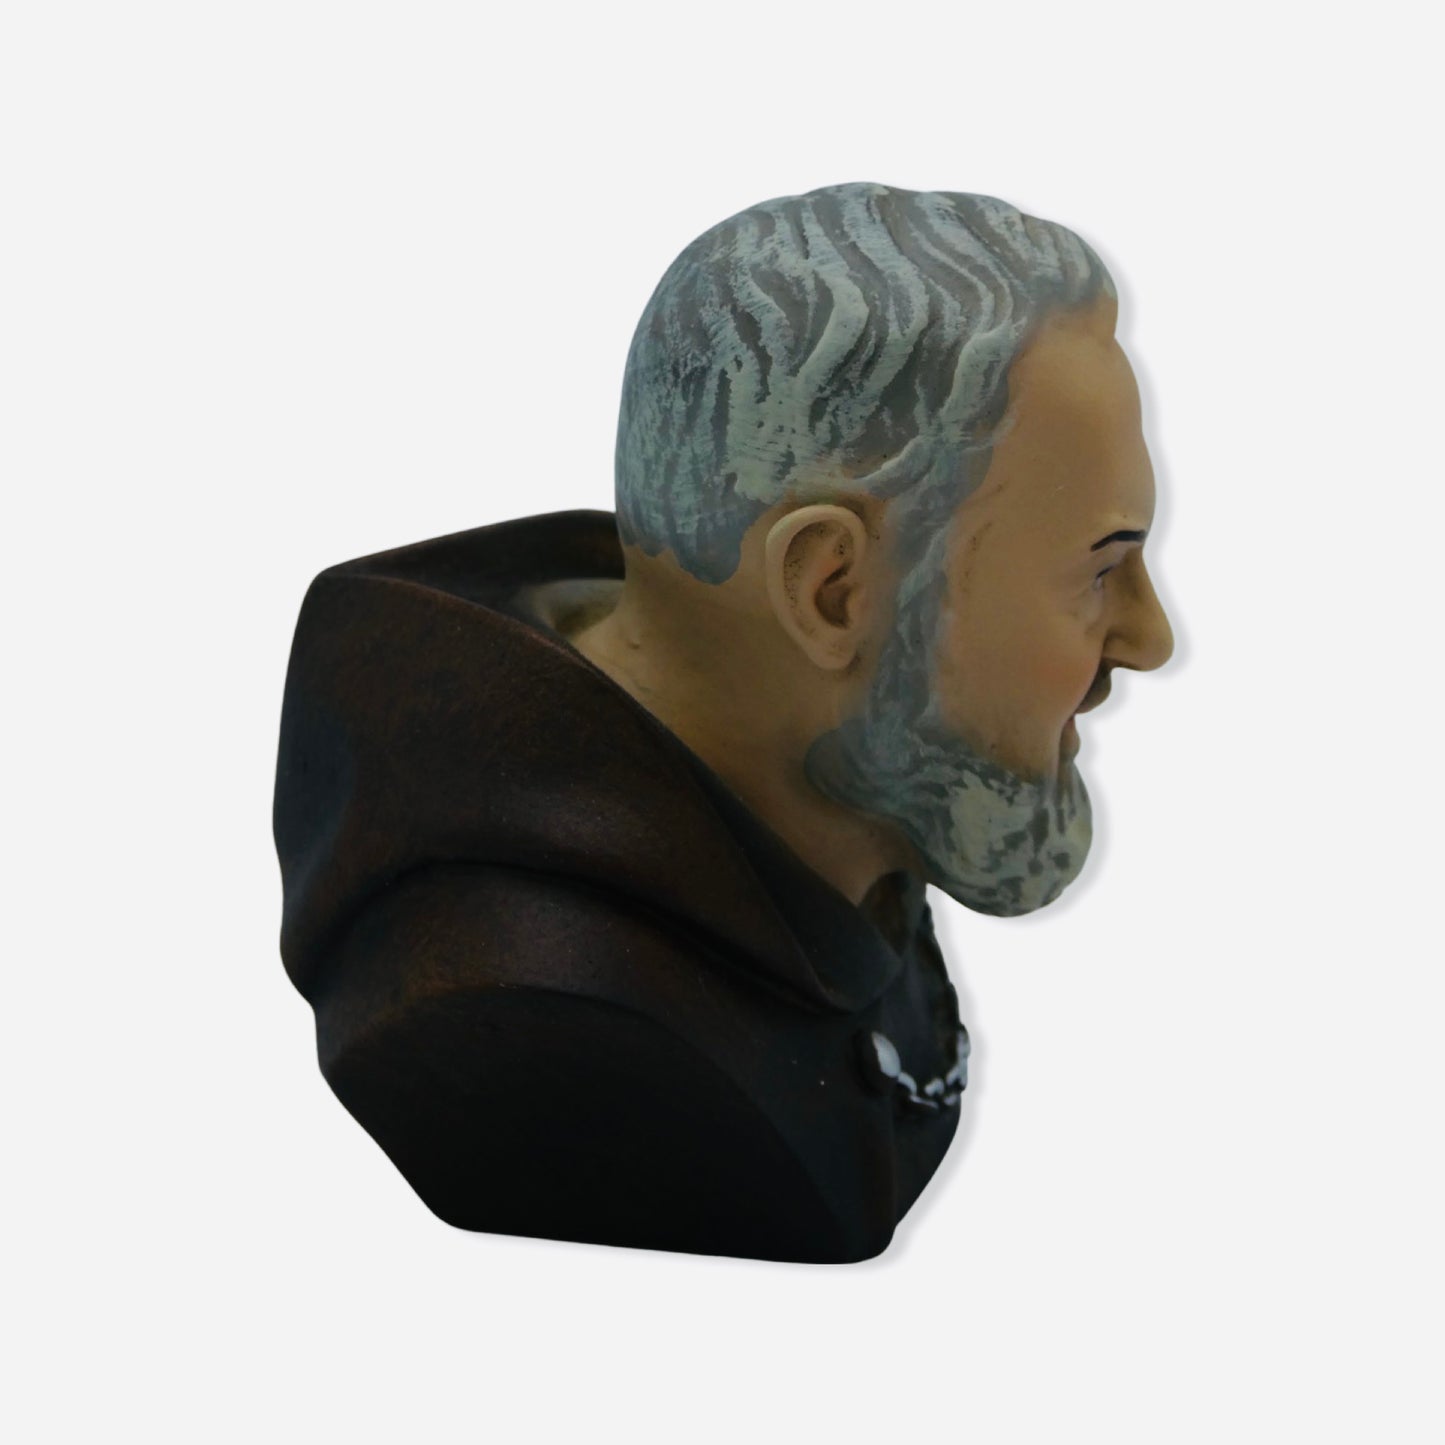 Padre Pio Bust Statue